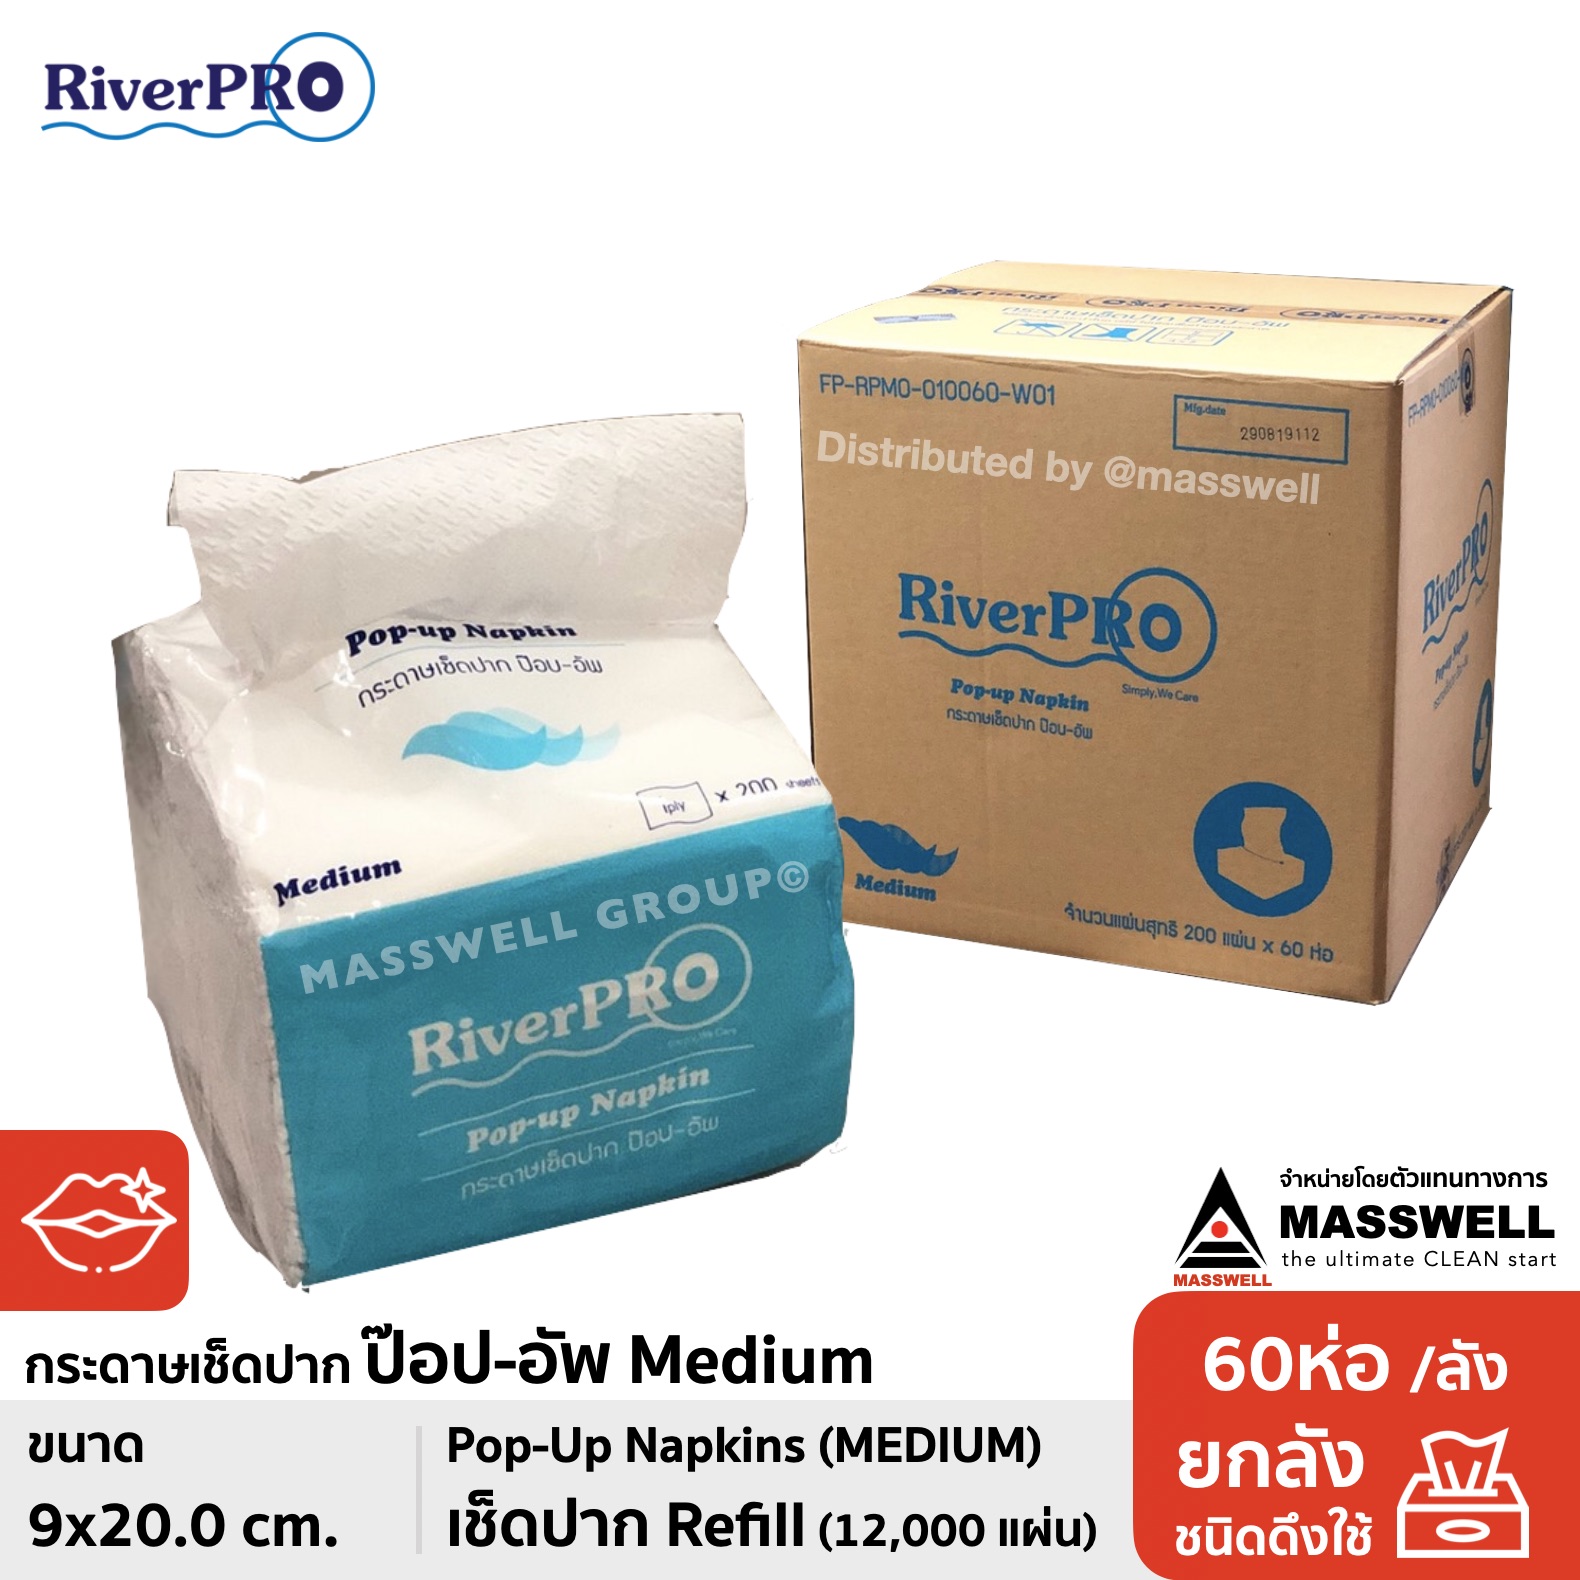 RiverPro กระดาษทิชชู่เช็ดปาก POP-UP รุ่น MEDIUM 200 แผ่น (60 ห่อ) ขายยกลัง